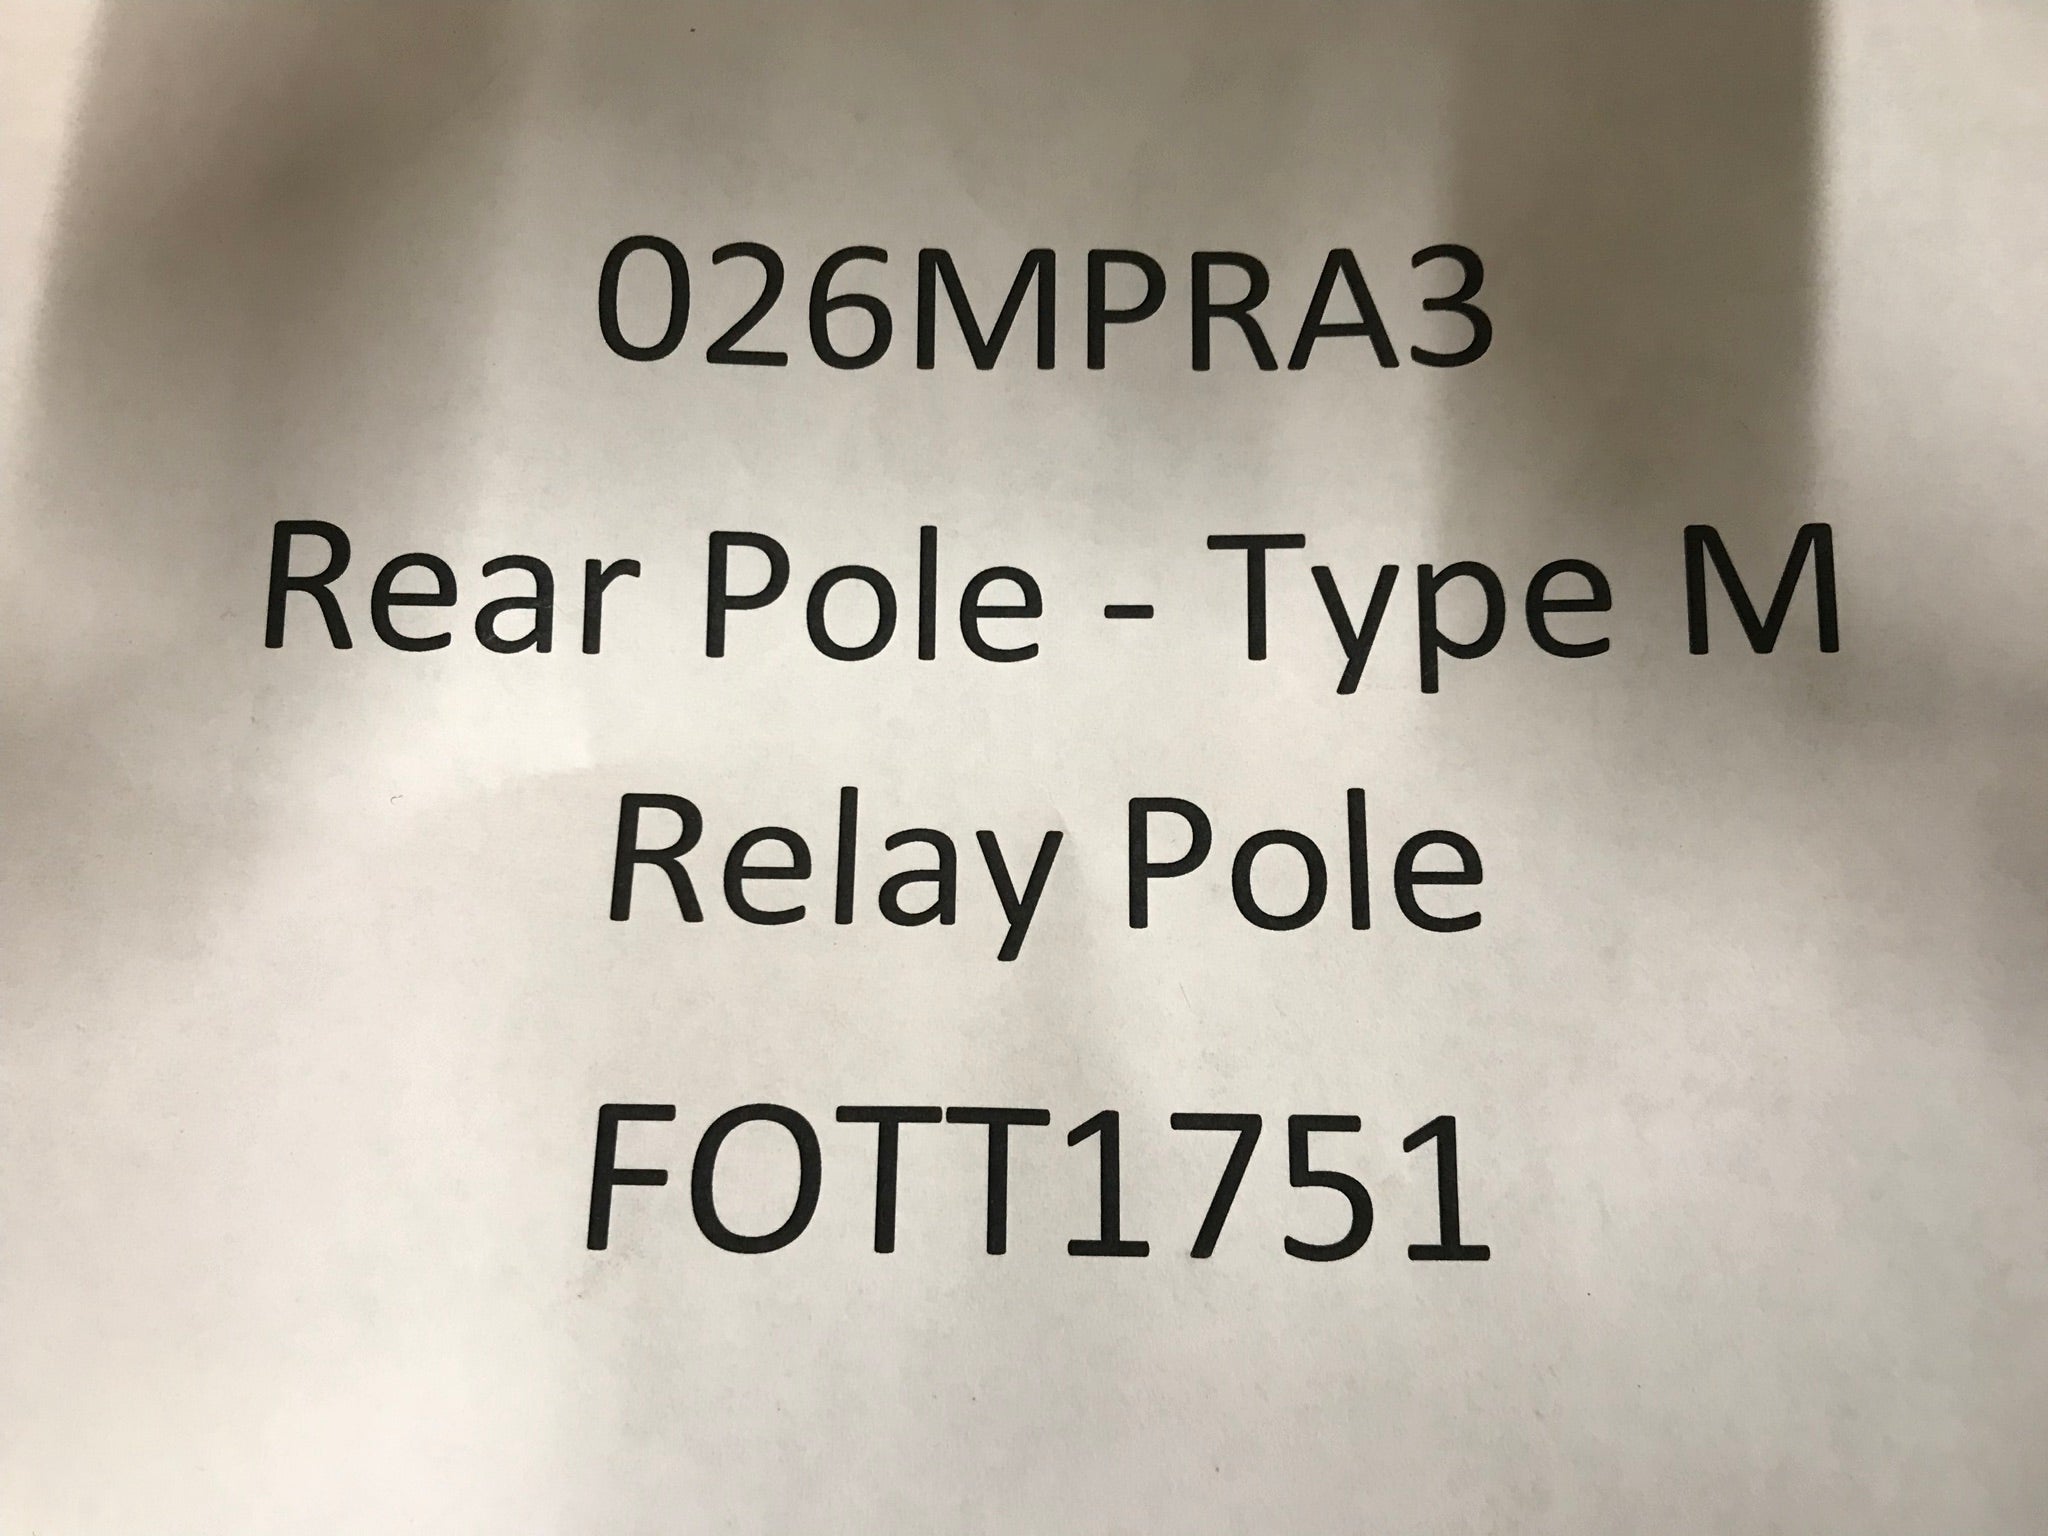 Rear Pole - Type M Relay Pole